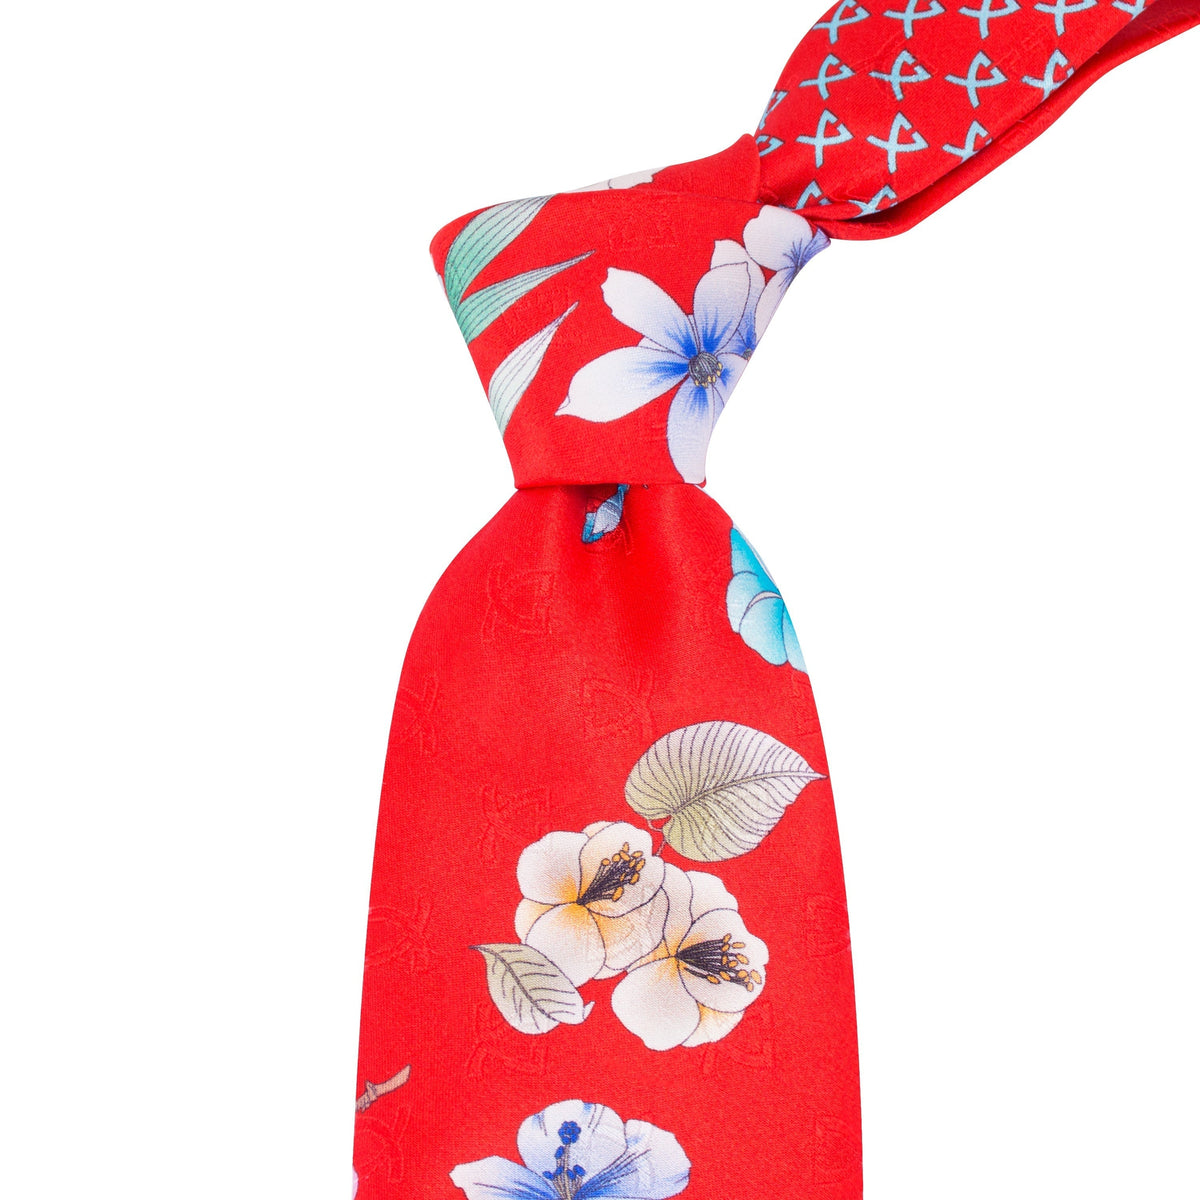 Leonard Scarlet Silk Satin 8cm Tie with Floral and Pink Cherry Prints-Cufflinks.com.sg | Neckties.com.sg